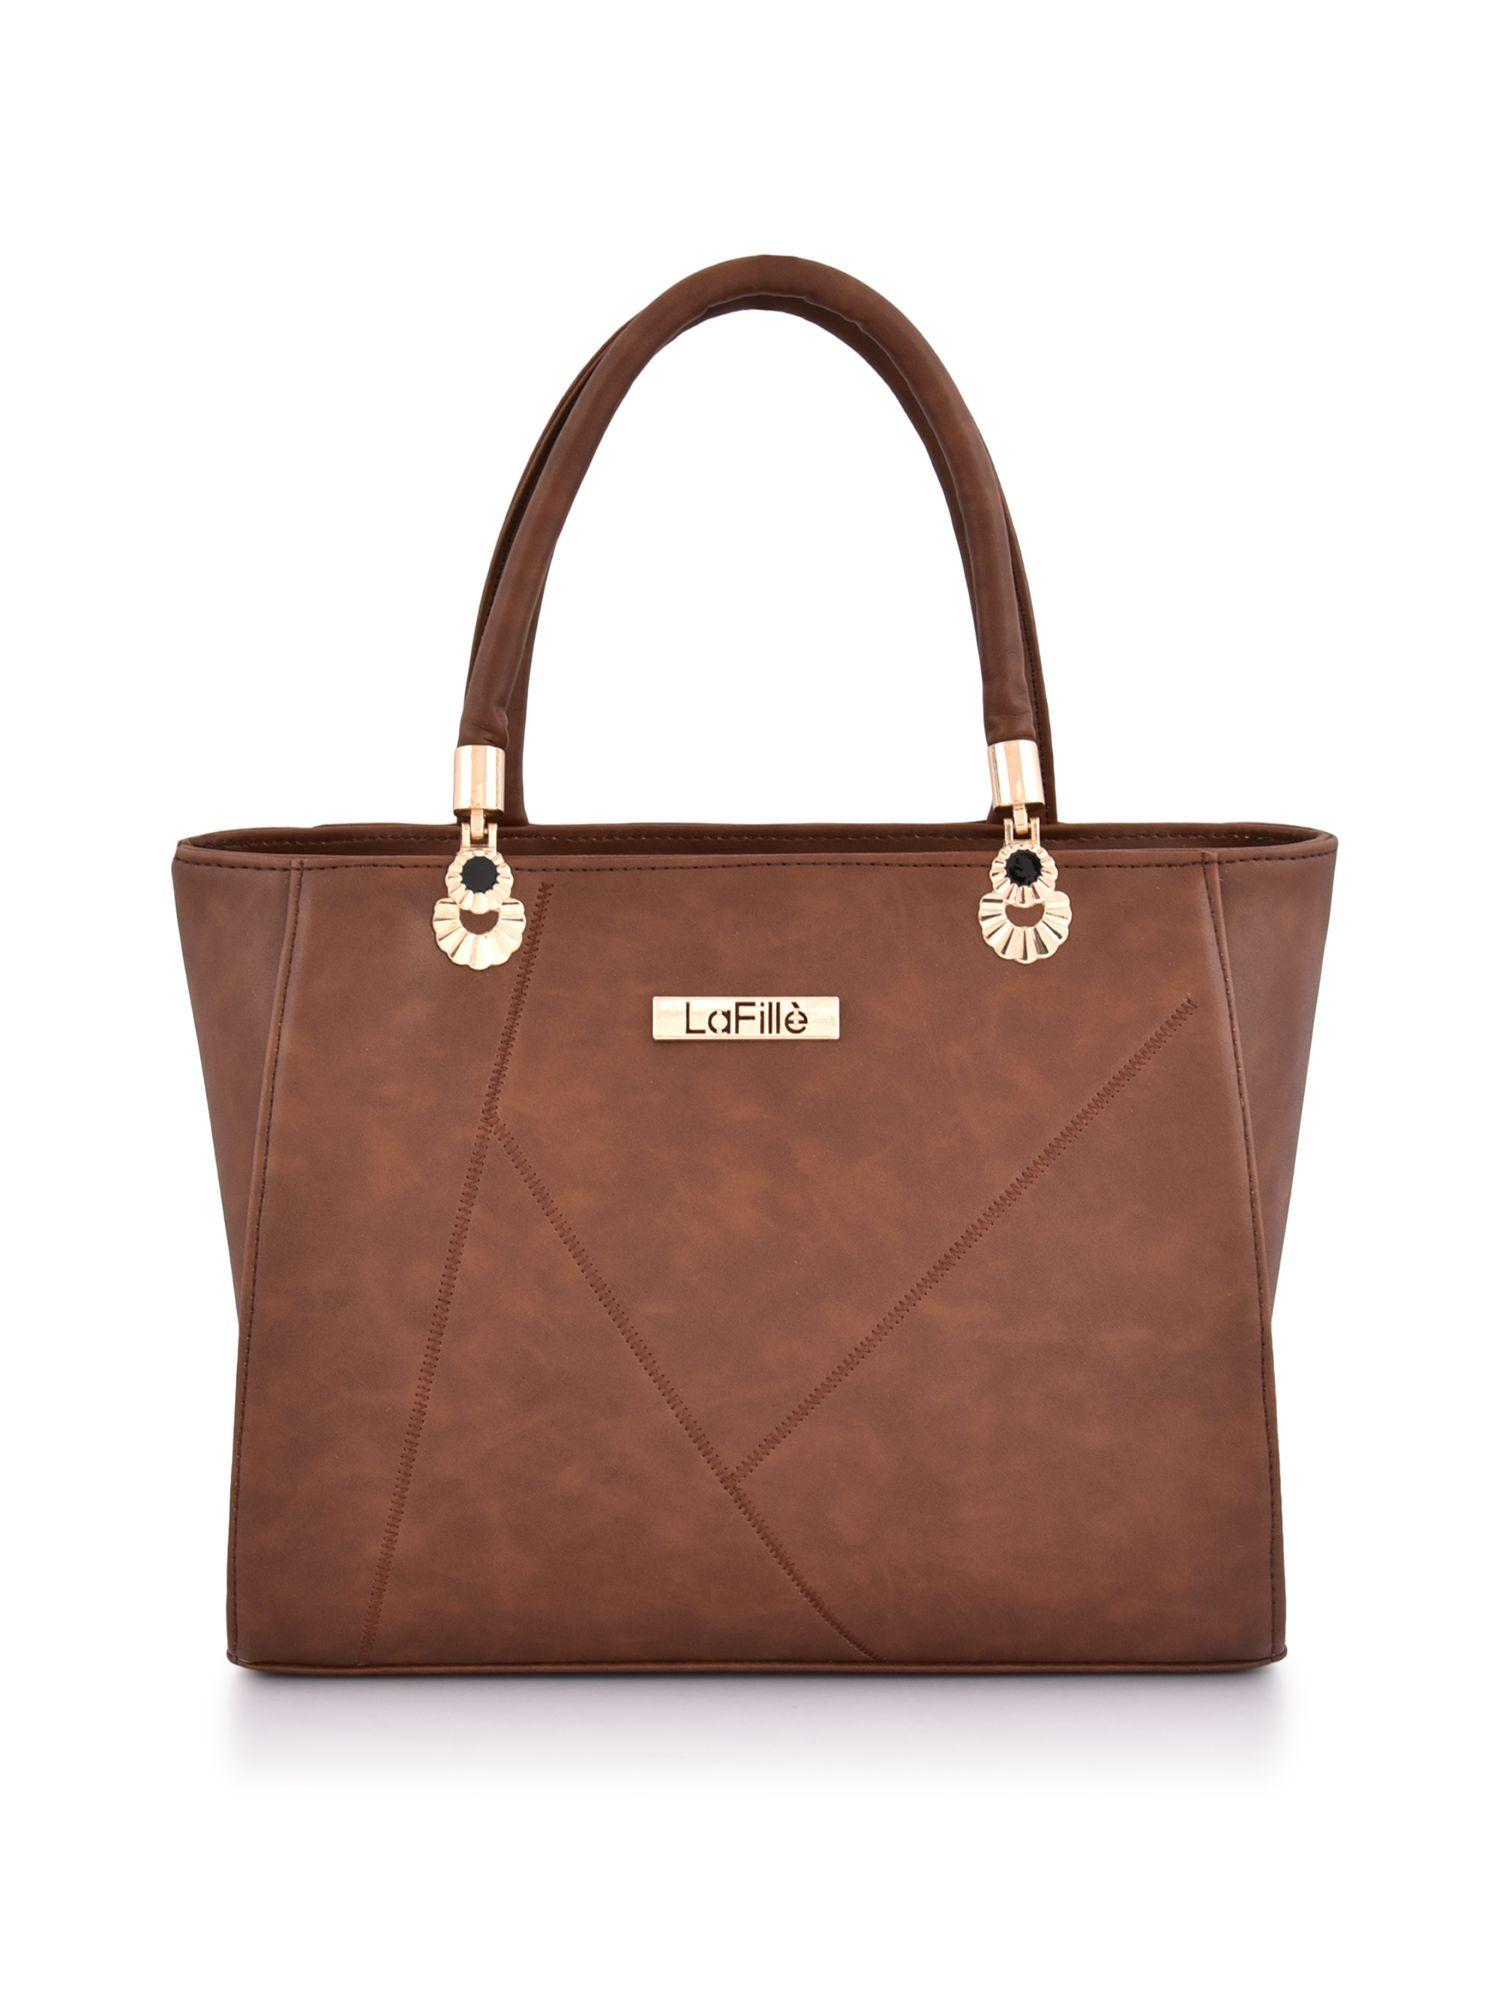 women's handbag | ladies purse